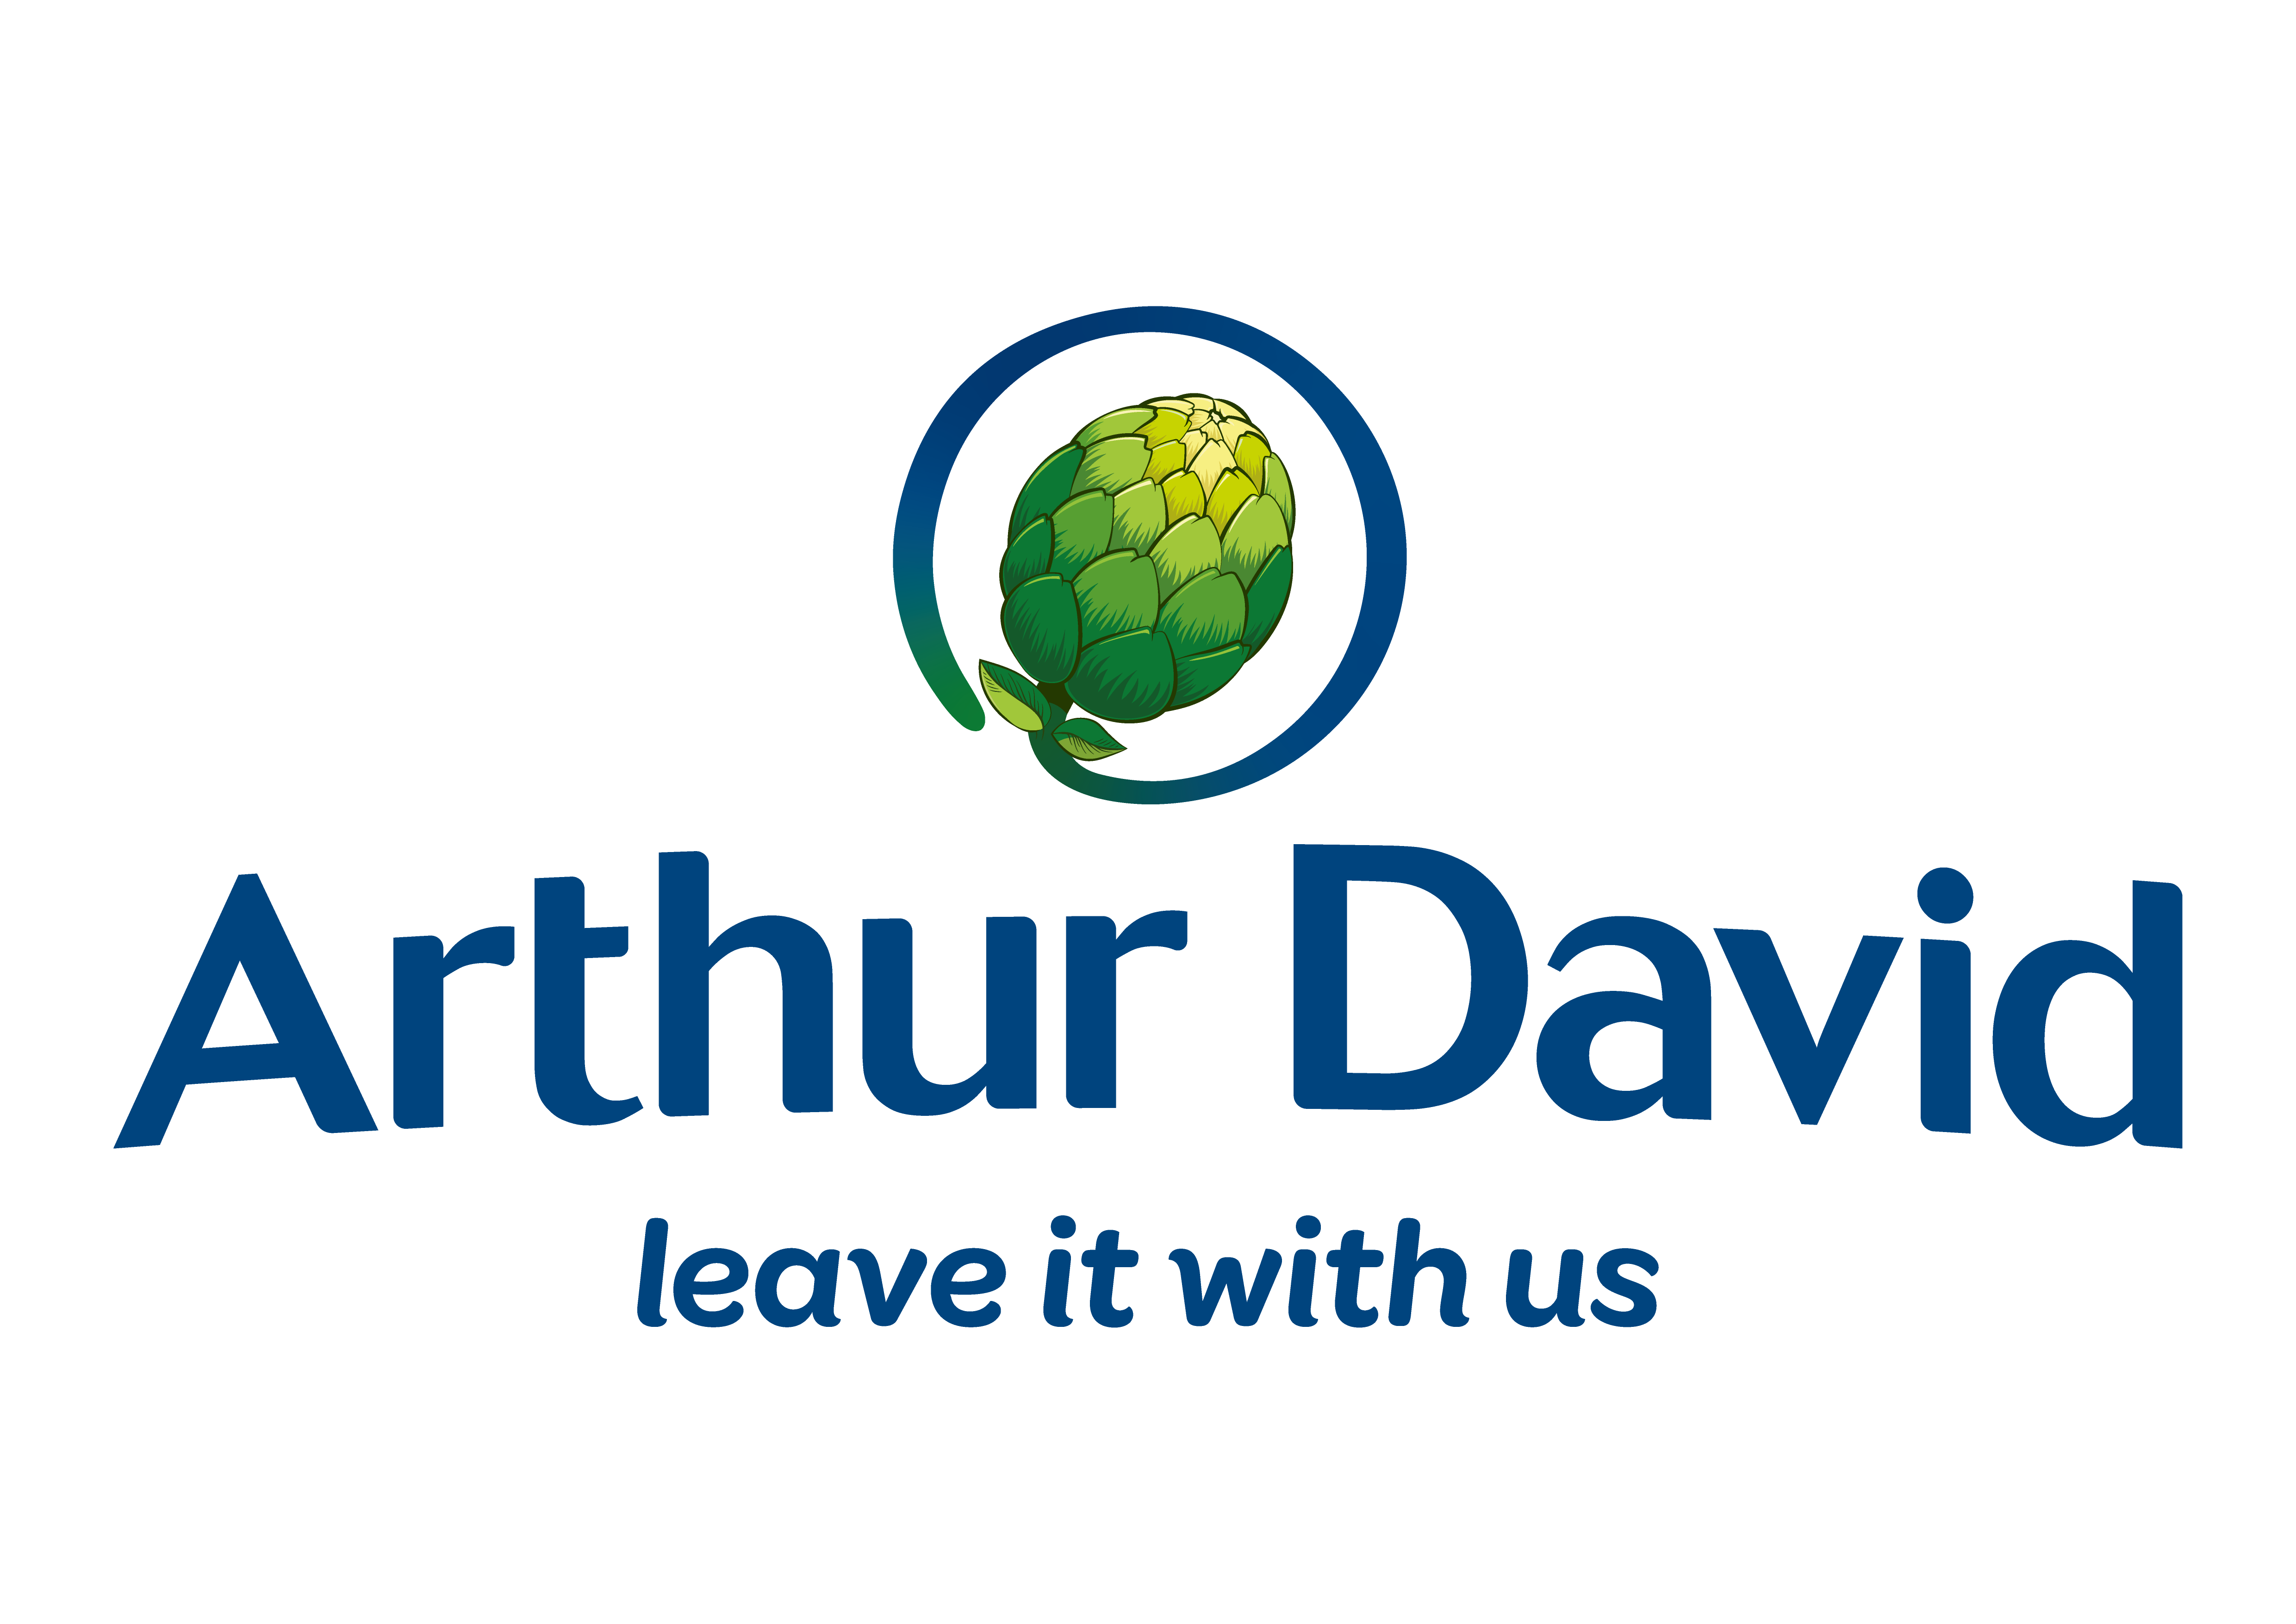 Arthur David (Food with Service) Ltd image.